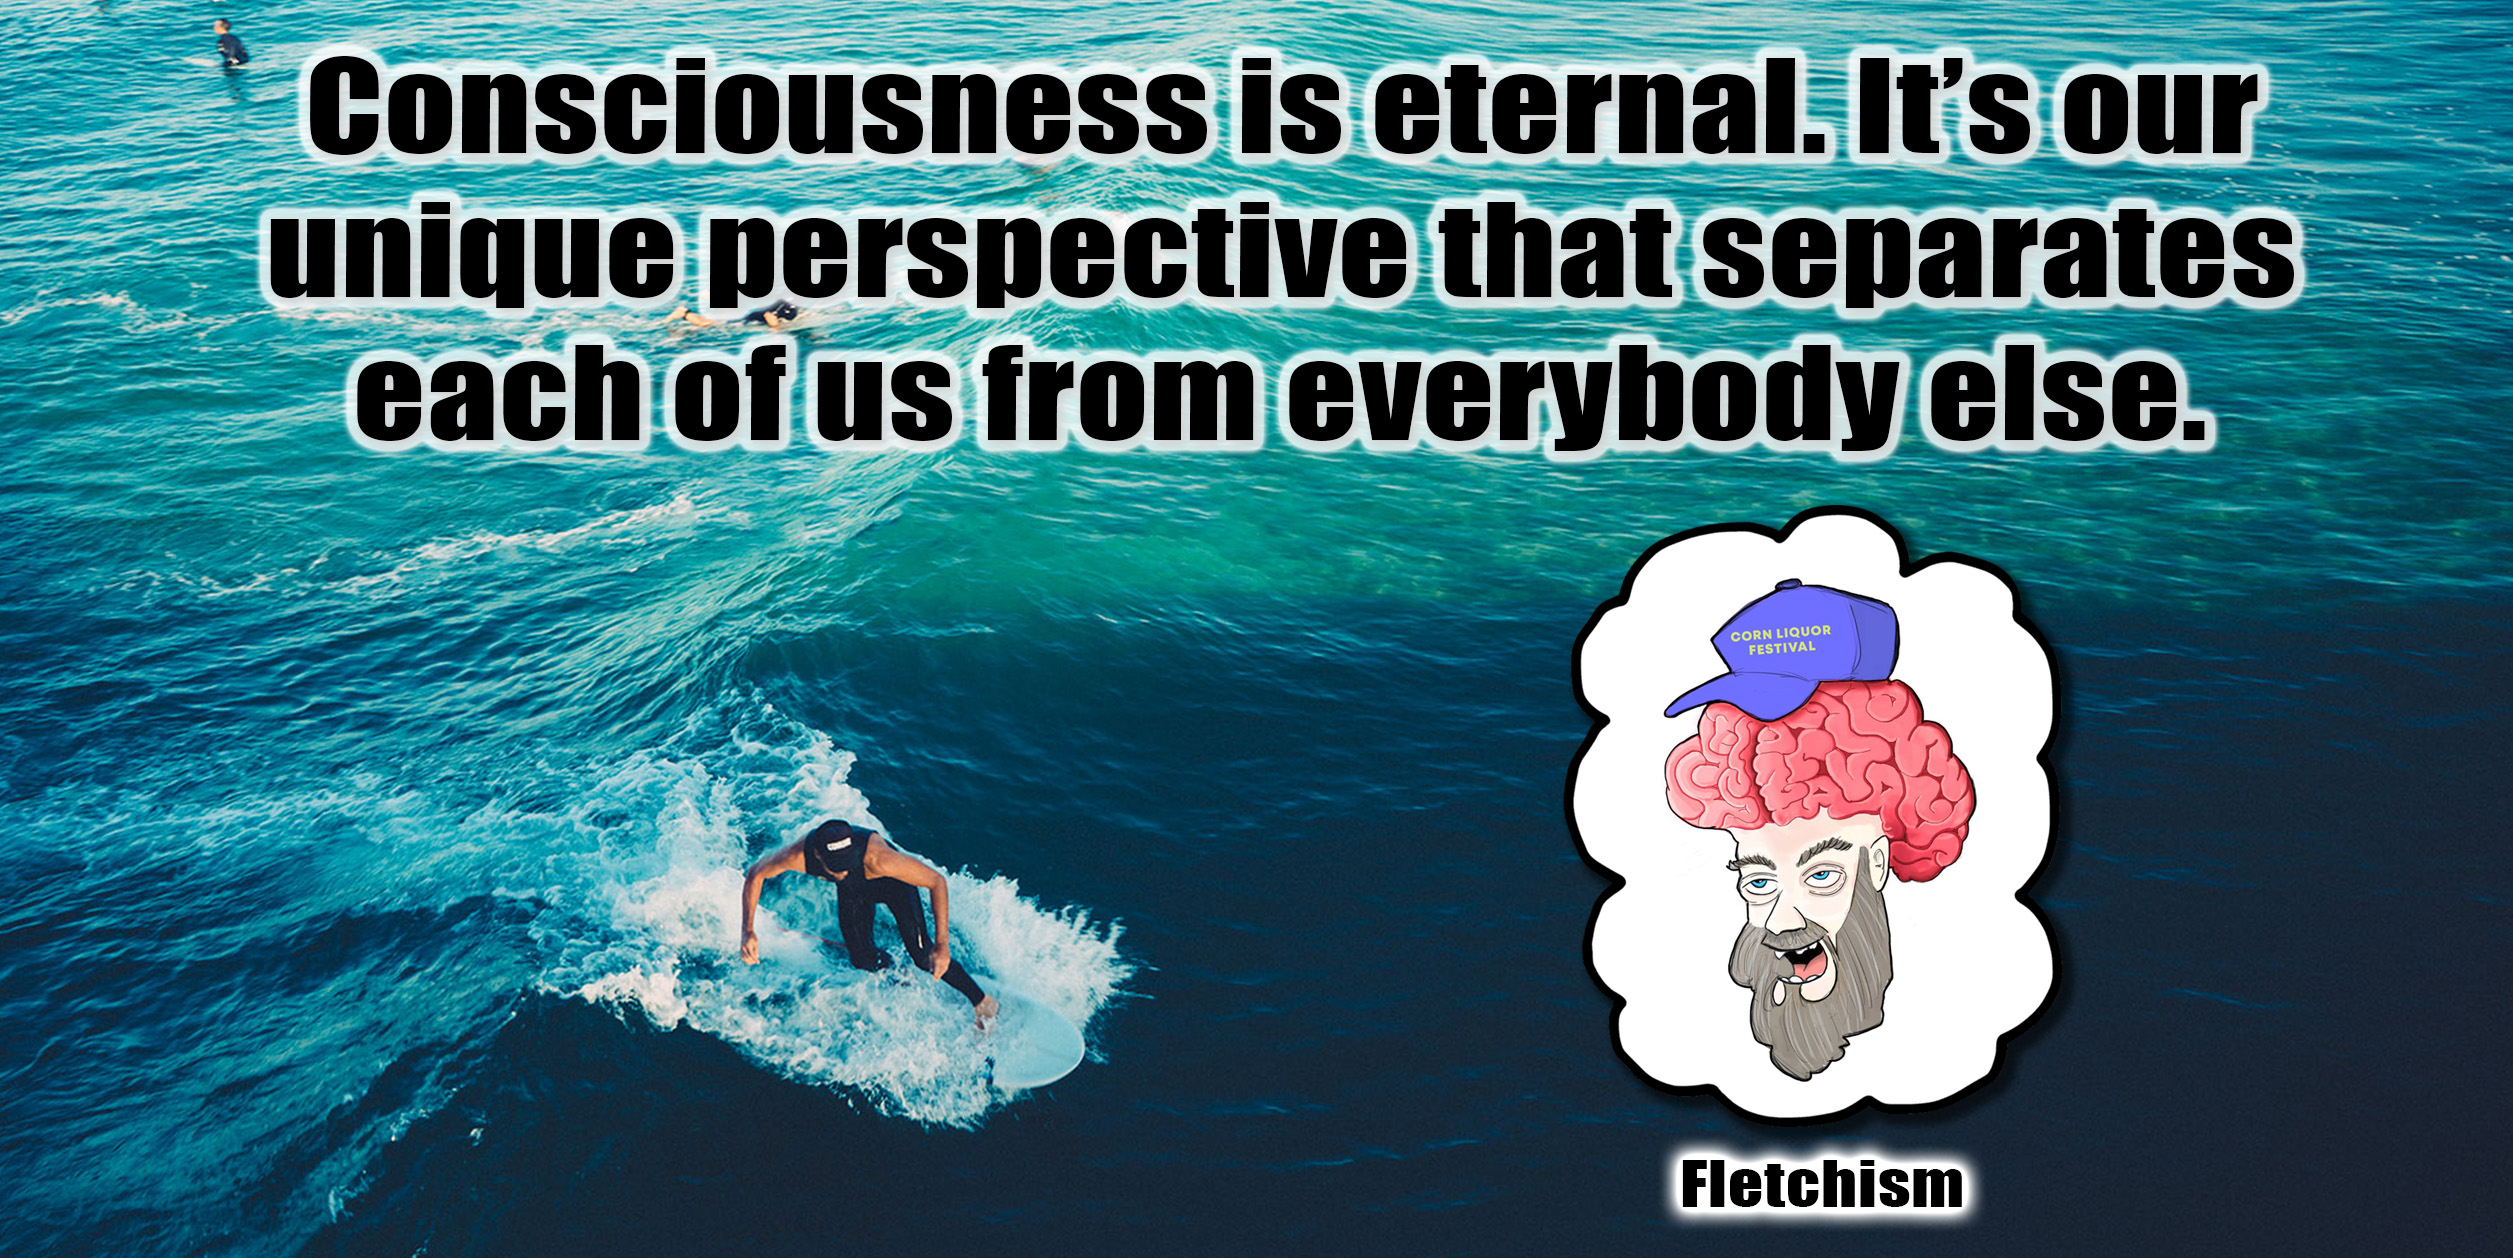 Fletchism - Consciousness is Eternal